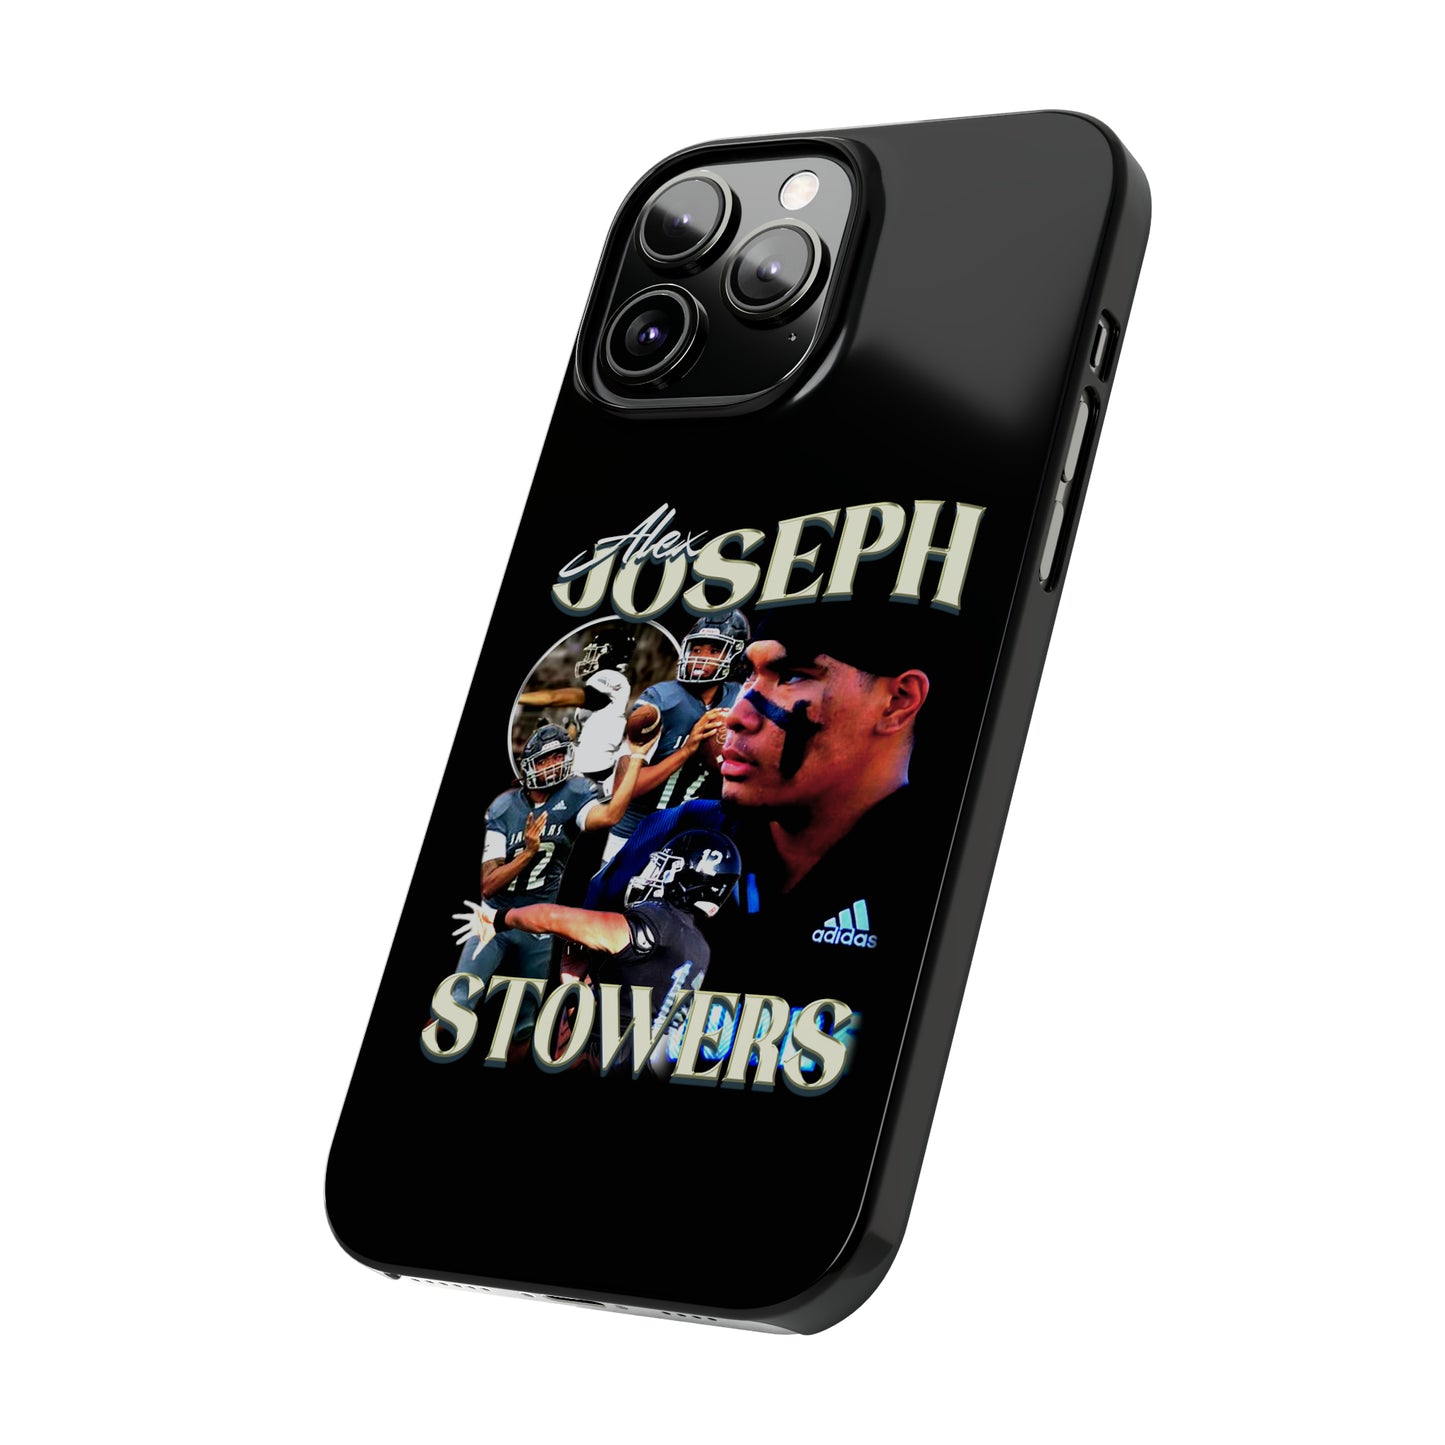 Alex Joseph Stowers Phone Cases